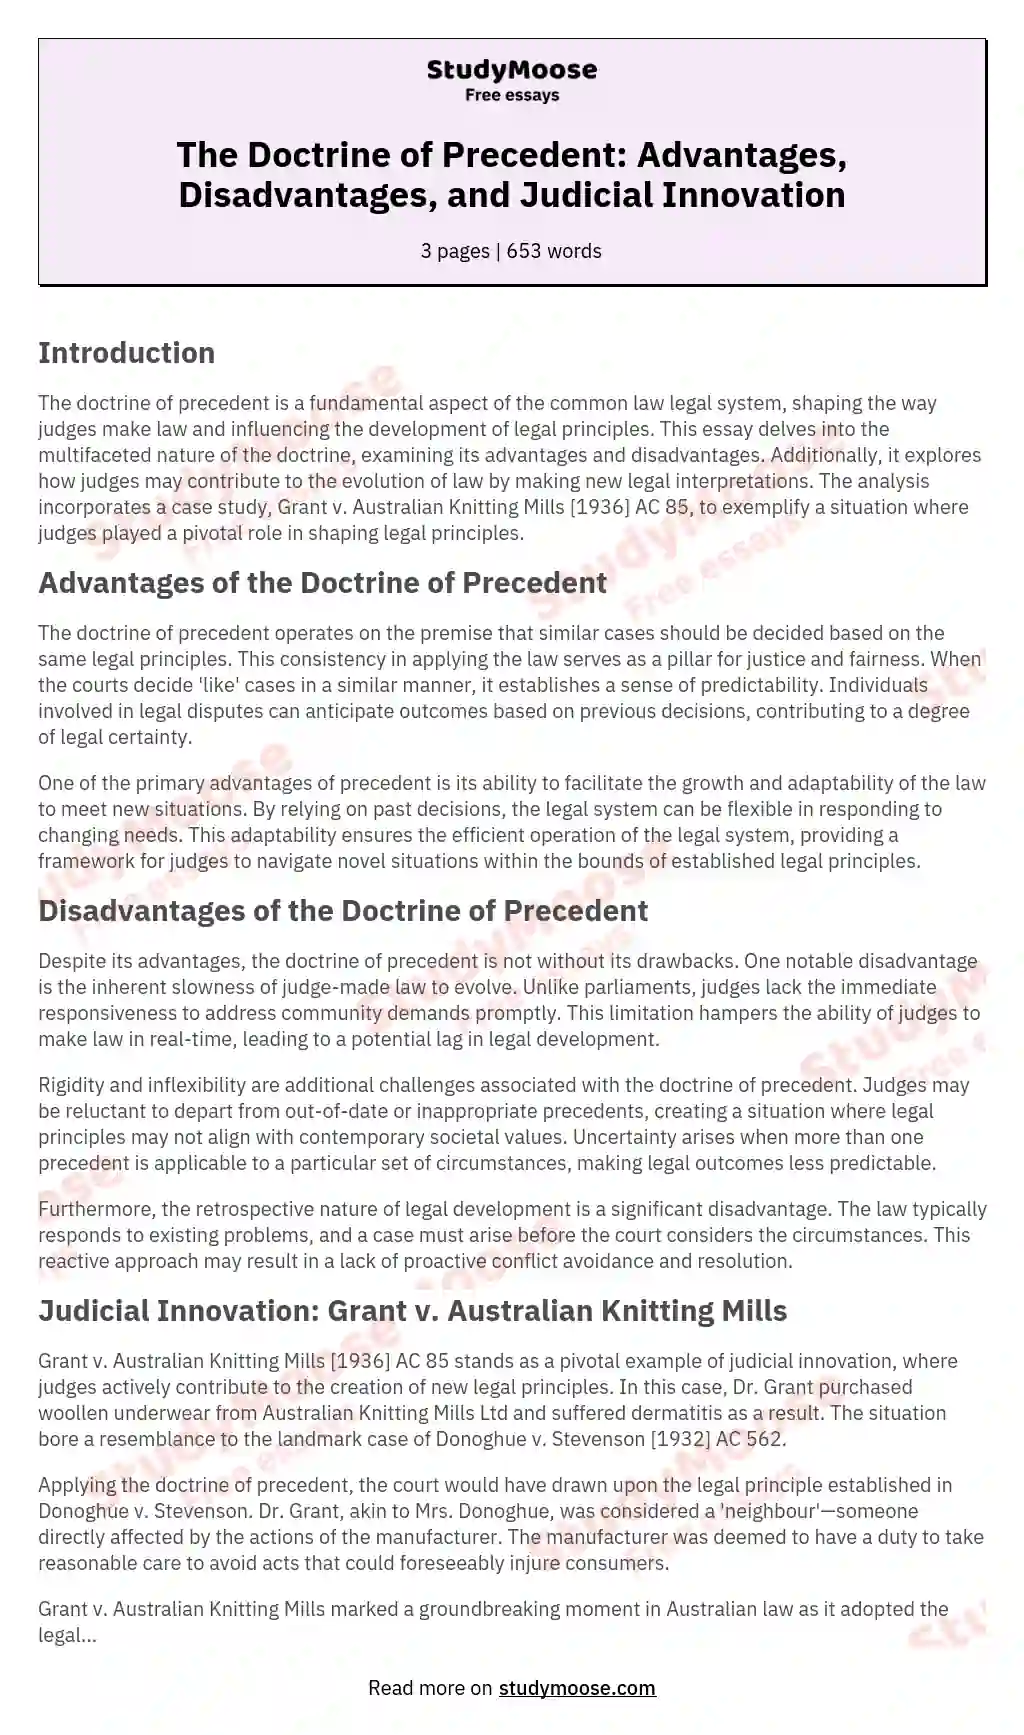 The Doctrine of Precedent: Advantages, Disadvantages, and Judicial Innovation essay